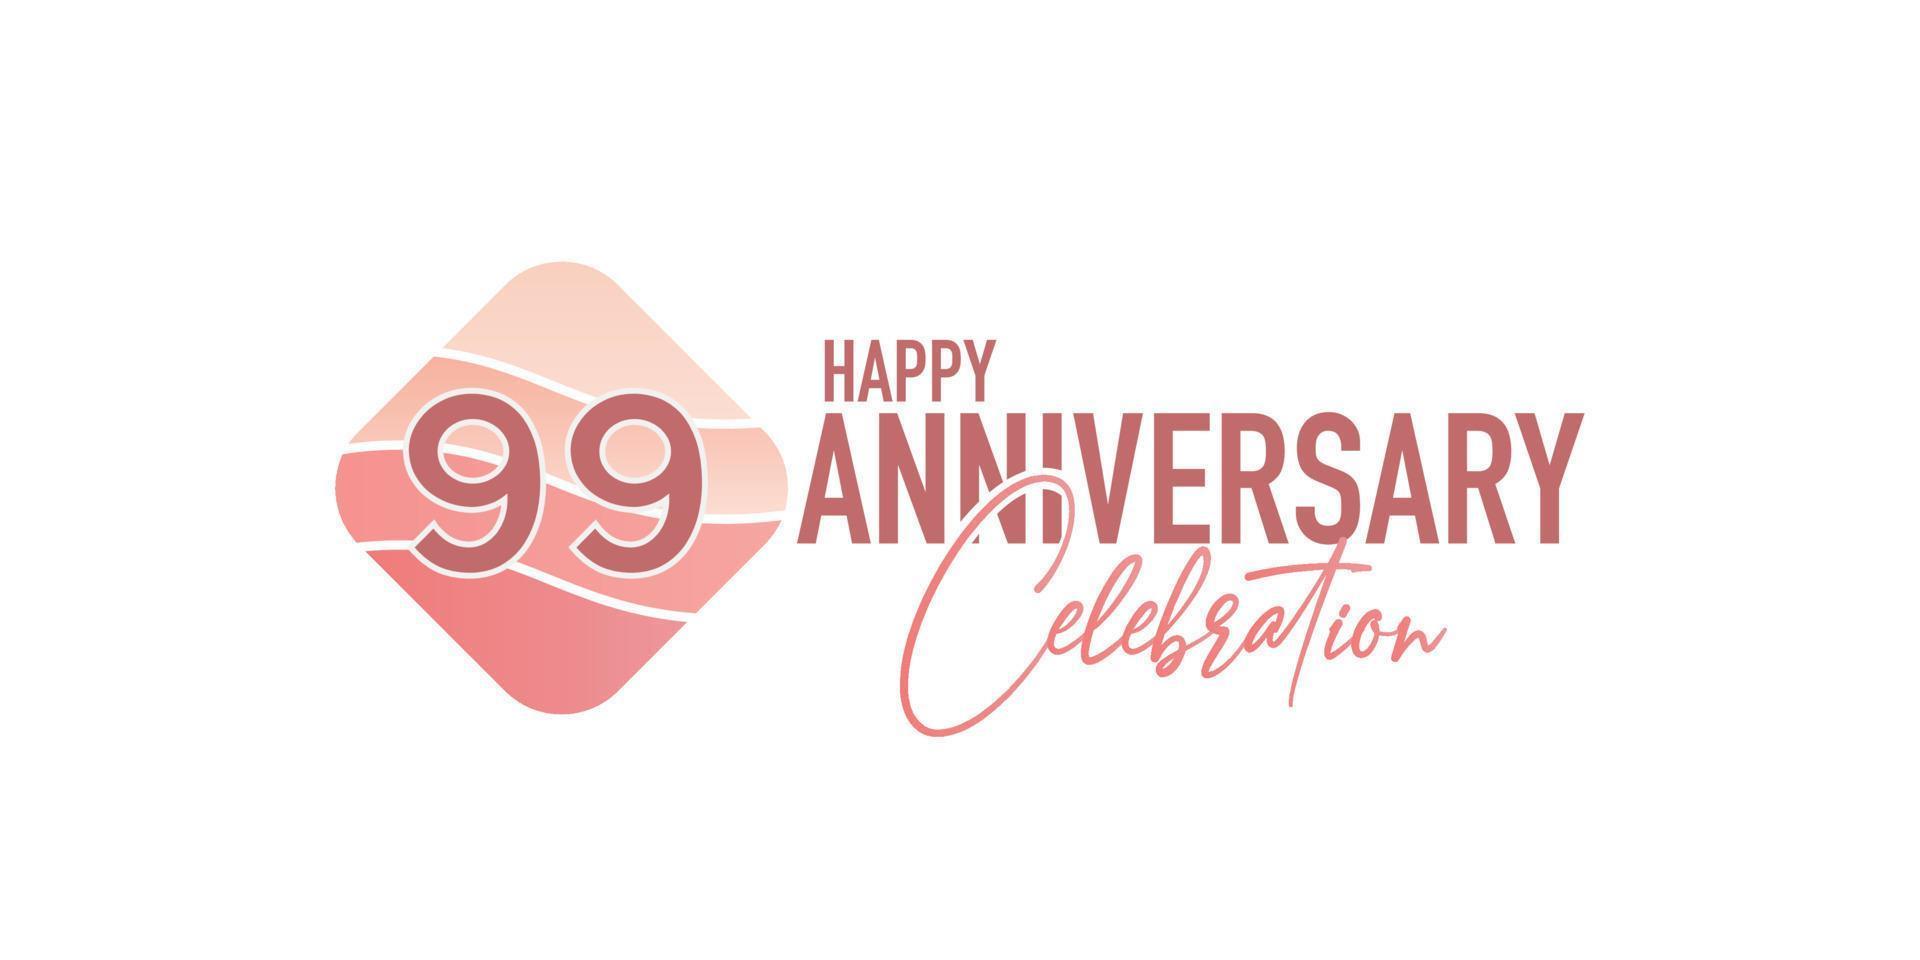 99 years anniversary logo vector illustration design celebration with pink geometric design